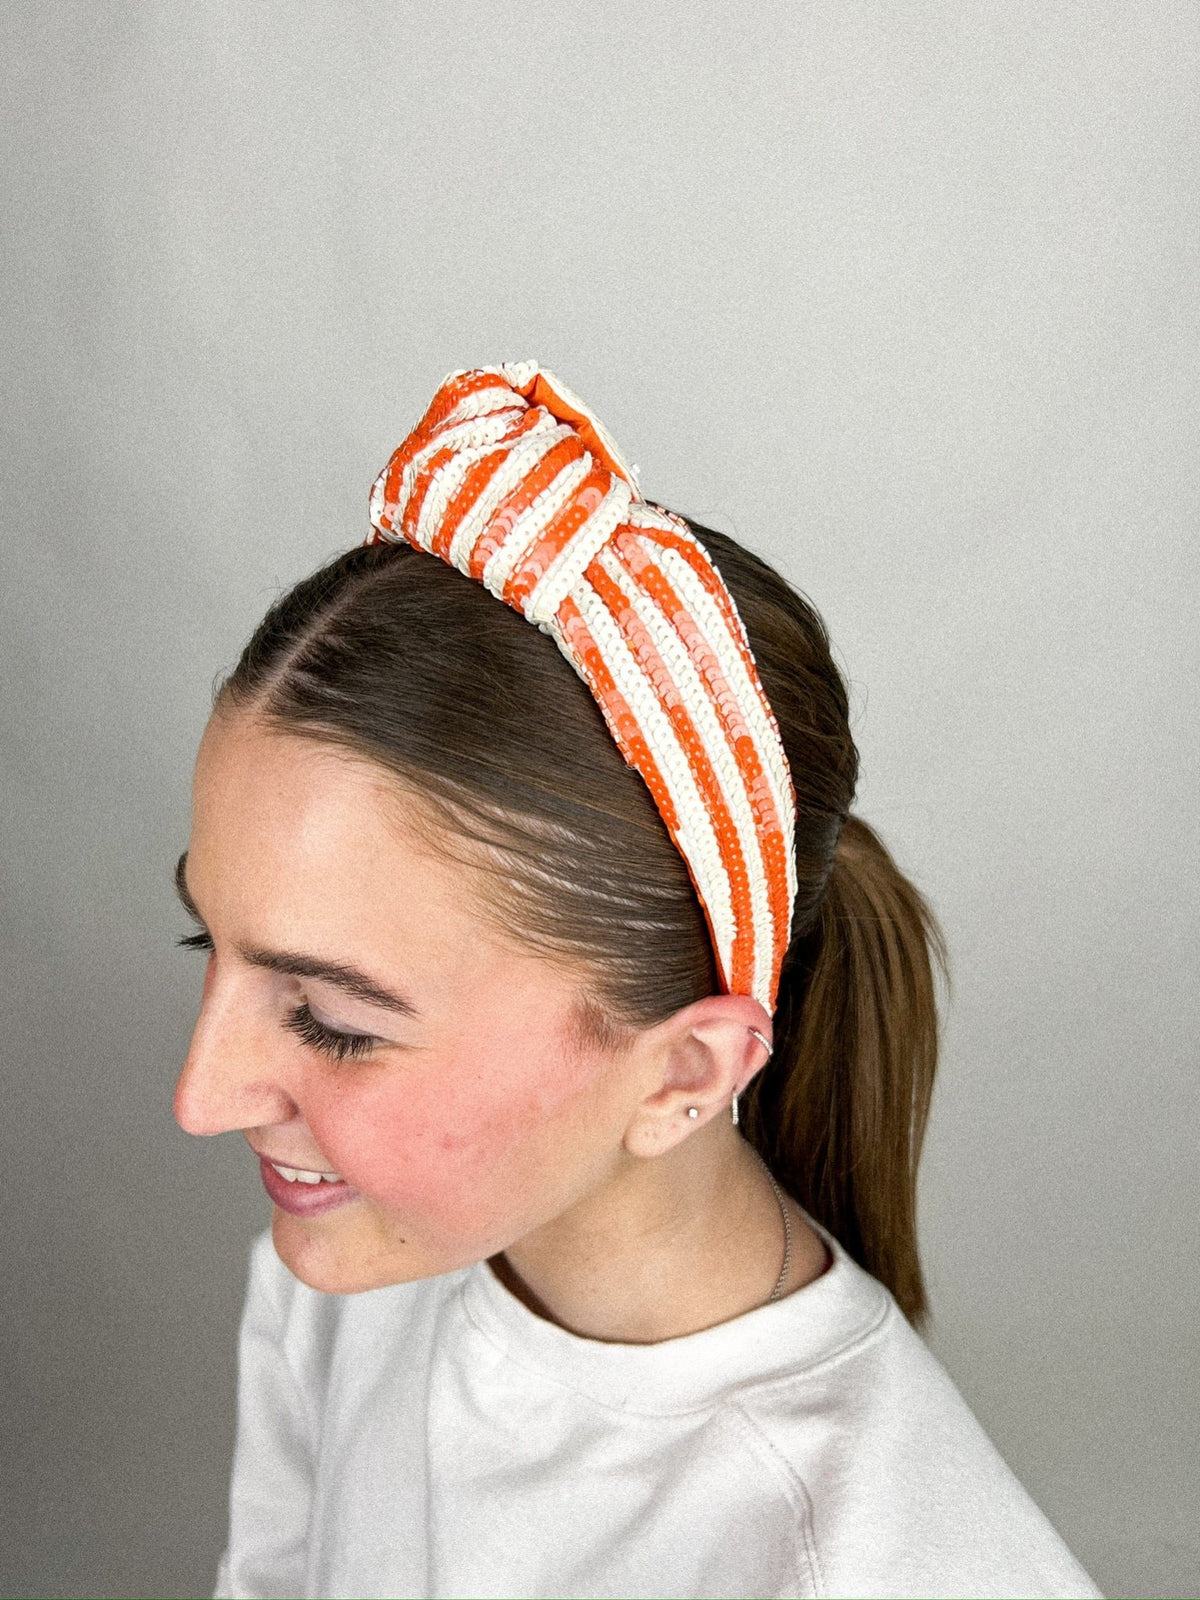 Sequin headband orange - Trendy OKC Apparel at Lush Fashion Lounge Boutique in Oklahoma City